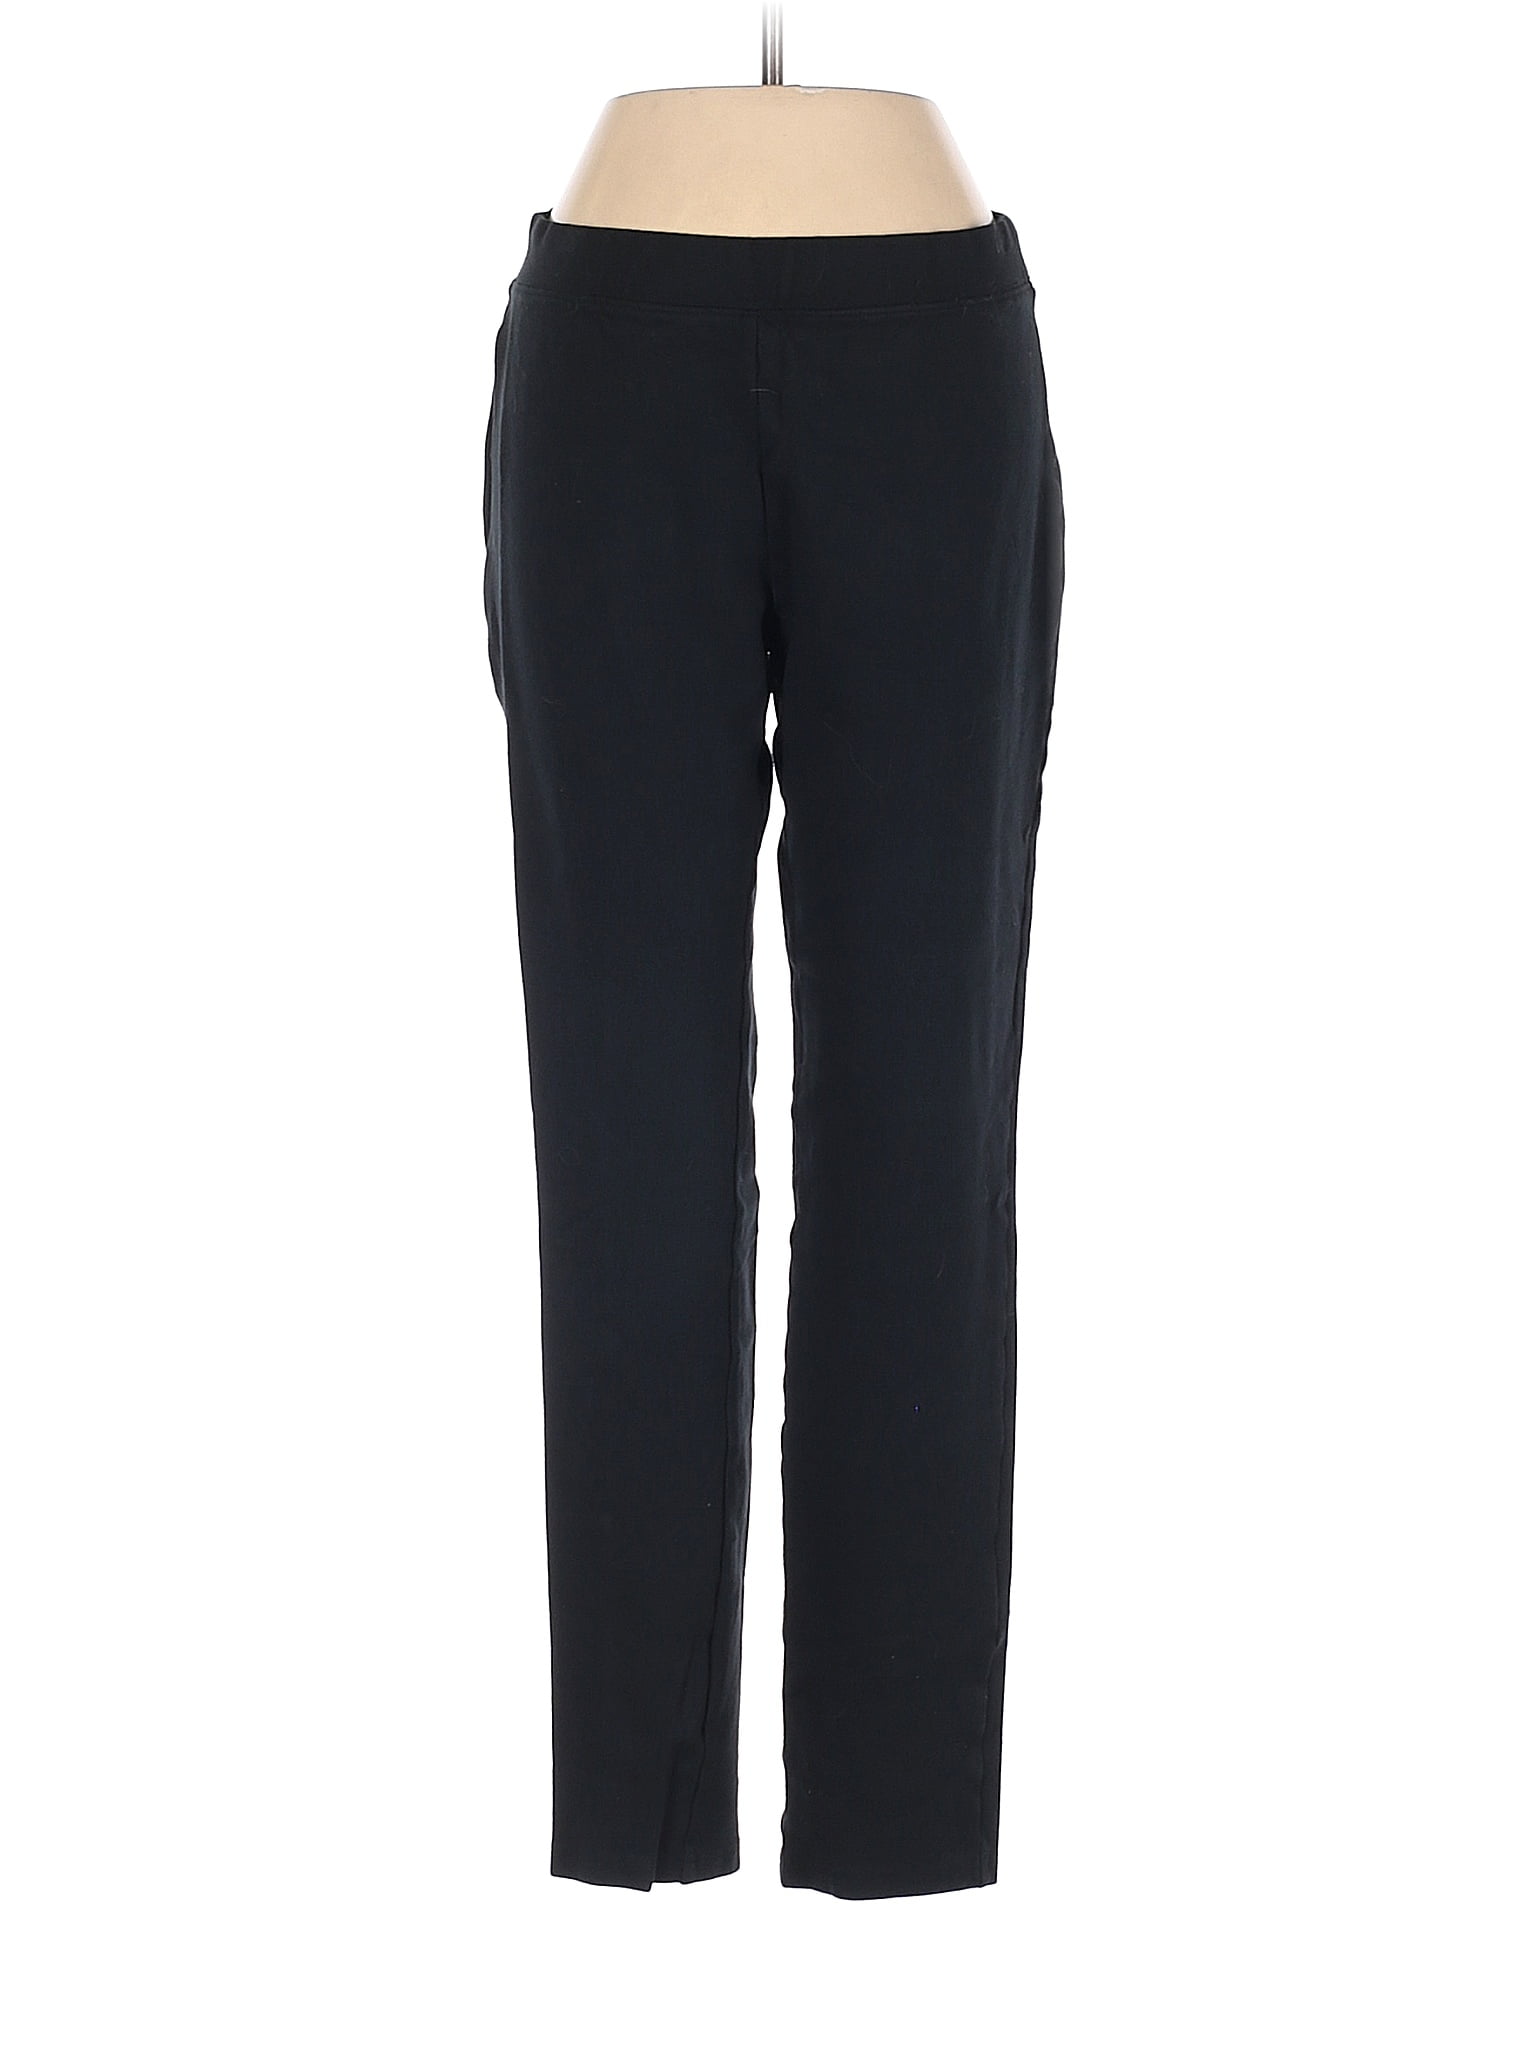 Cabela's Black Casual Pants Size S - 79% off | thredUP